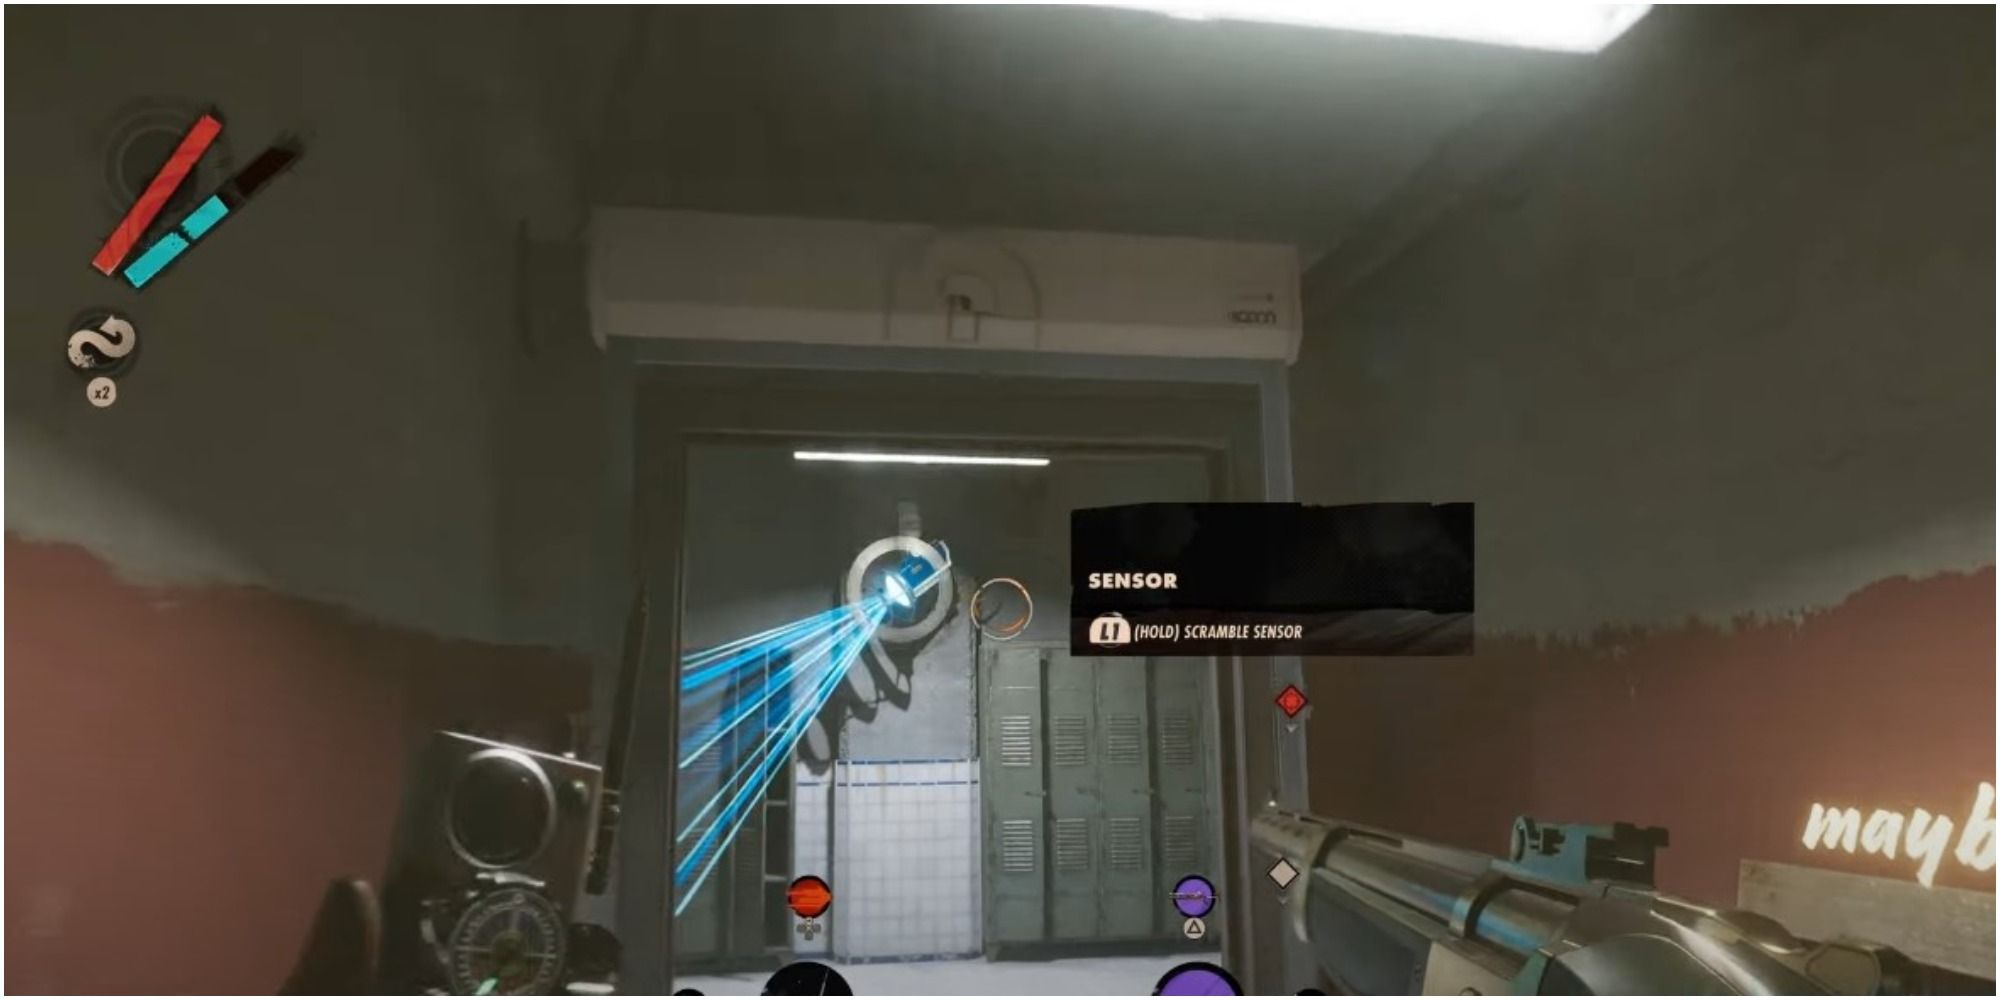 Deathloop Disabling The Security Camera In Fia's Locker Room